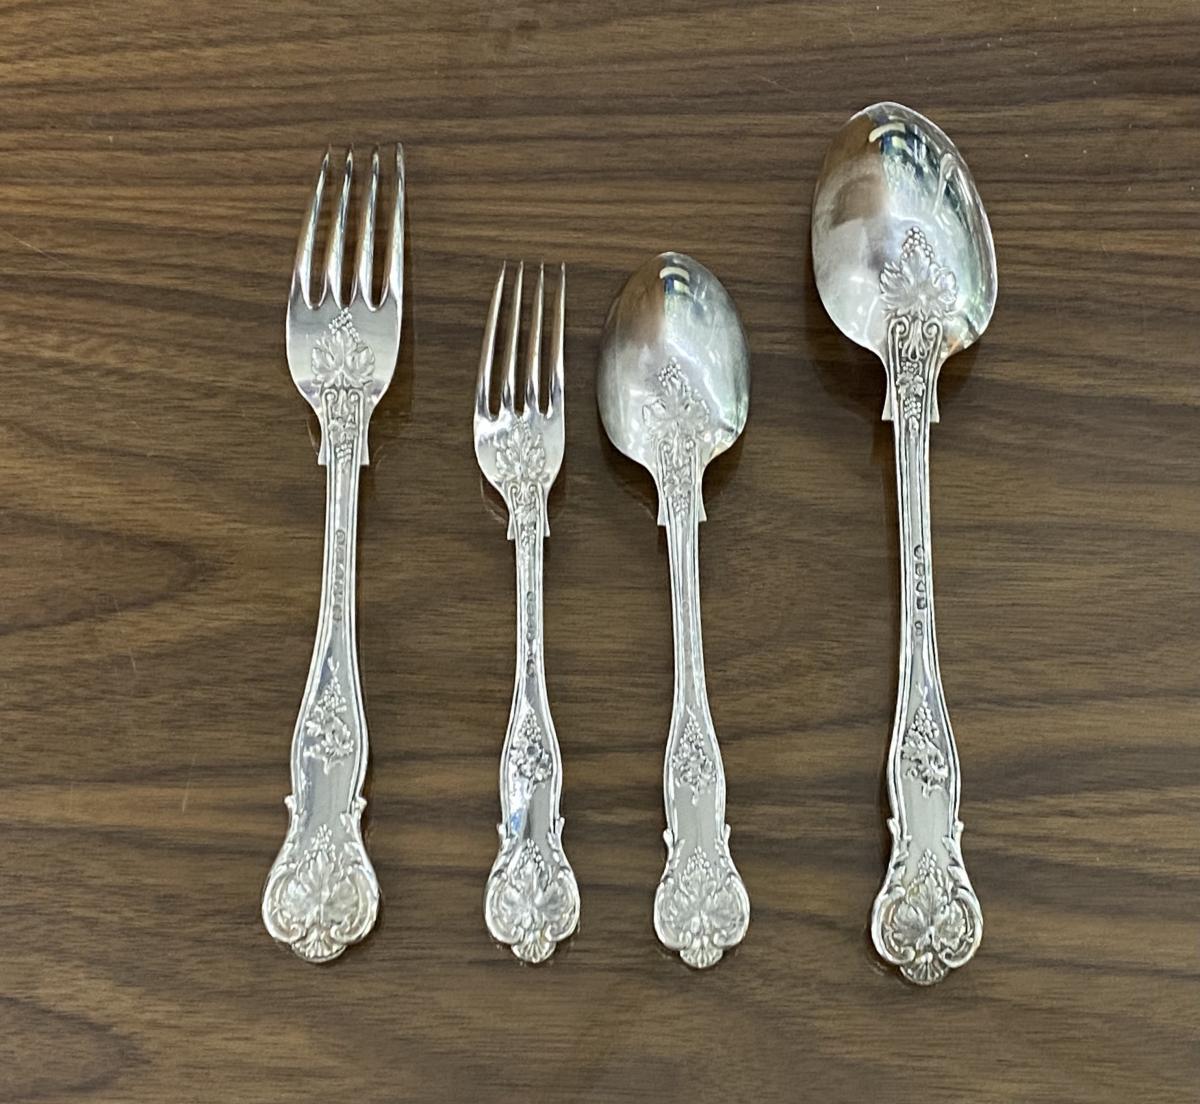 George Adams Bright Vine silver cutlery flatware 